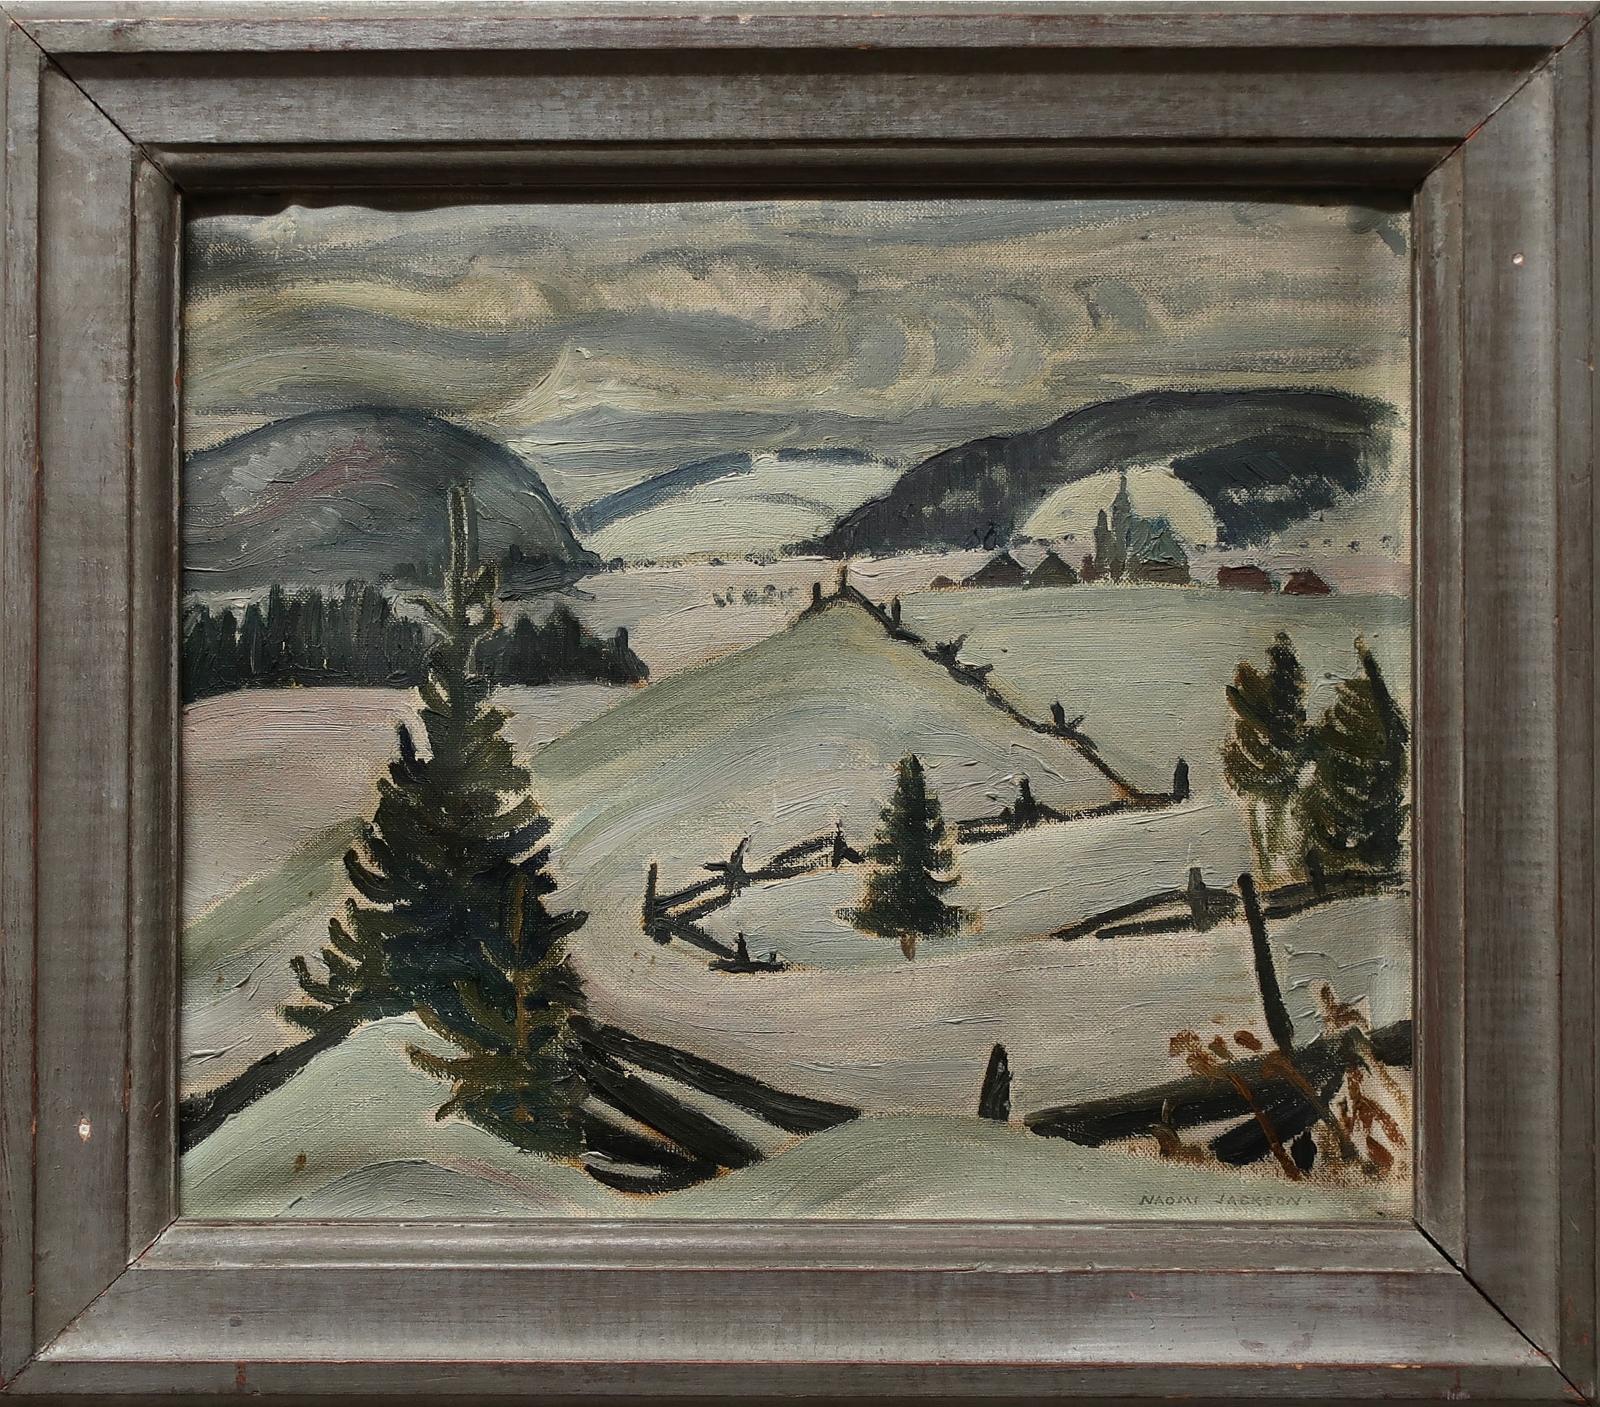 Naomi Jackson Groves (1910-2001) - Snowy Landscape